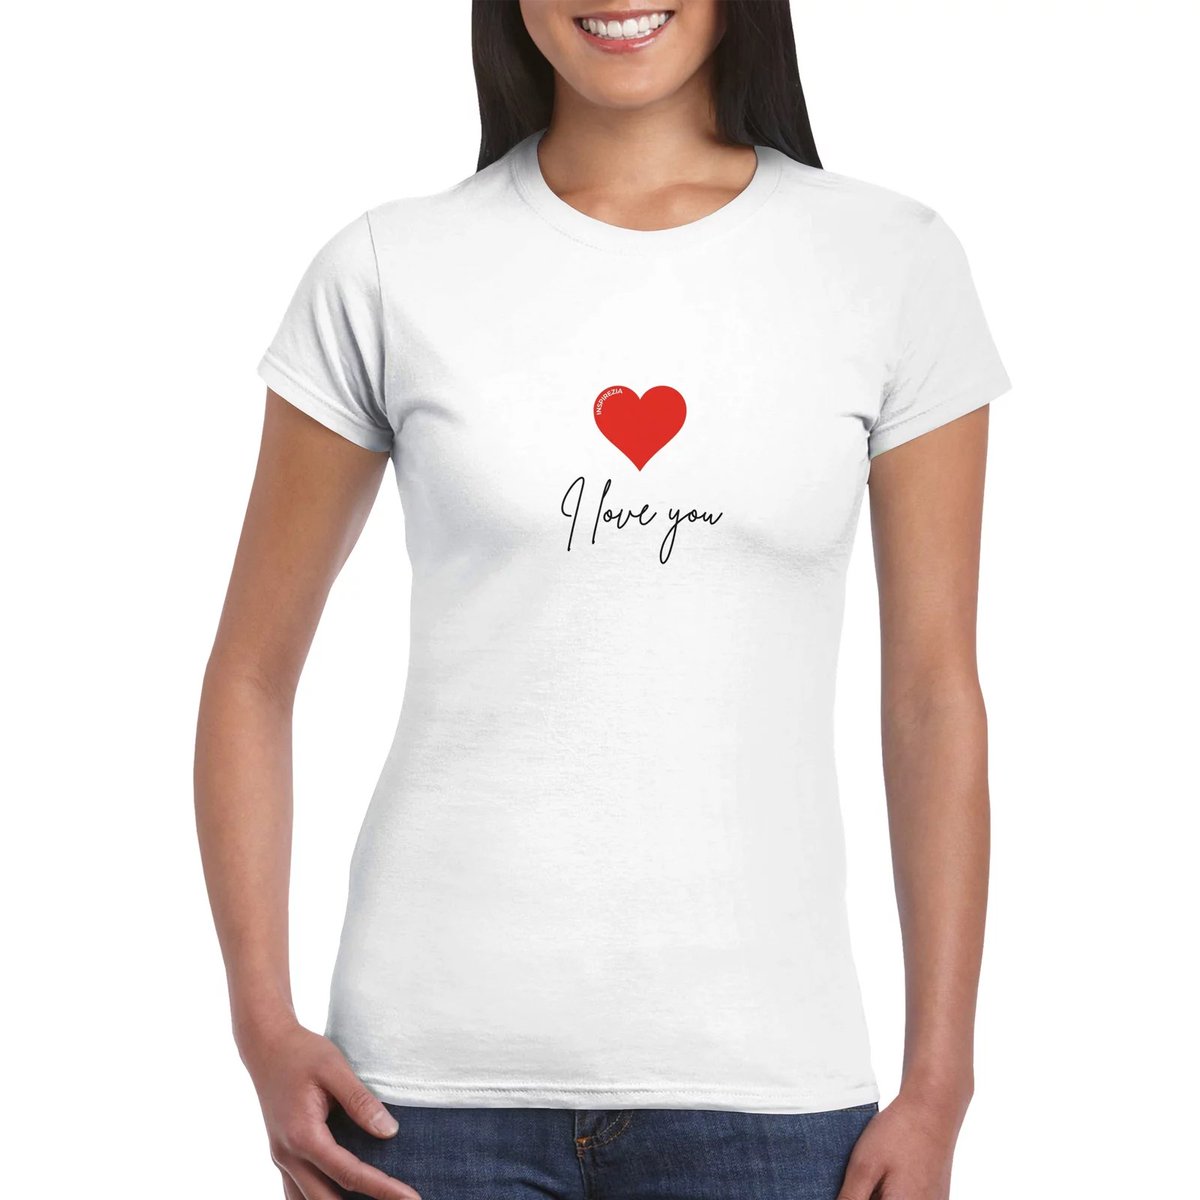 We believe in love ❤️

#tshirts #joy #fun #love #motivation #inspired #inspirezia #trends #casualwear #fashion #happyvibes #gifts #giftforher #bestgift #madetoorder #positivity #spread #style #wearing #womensfashion